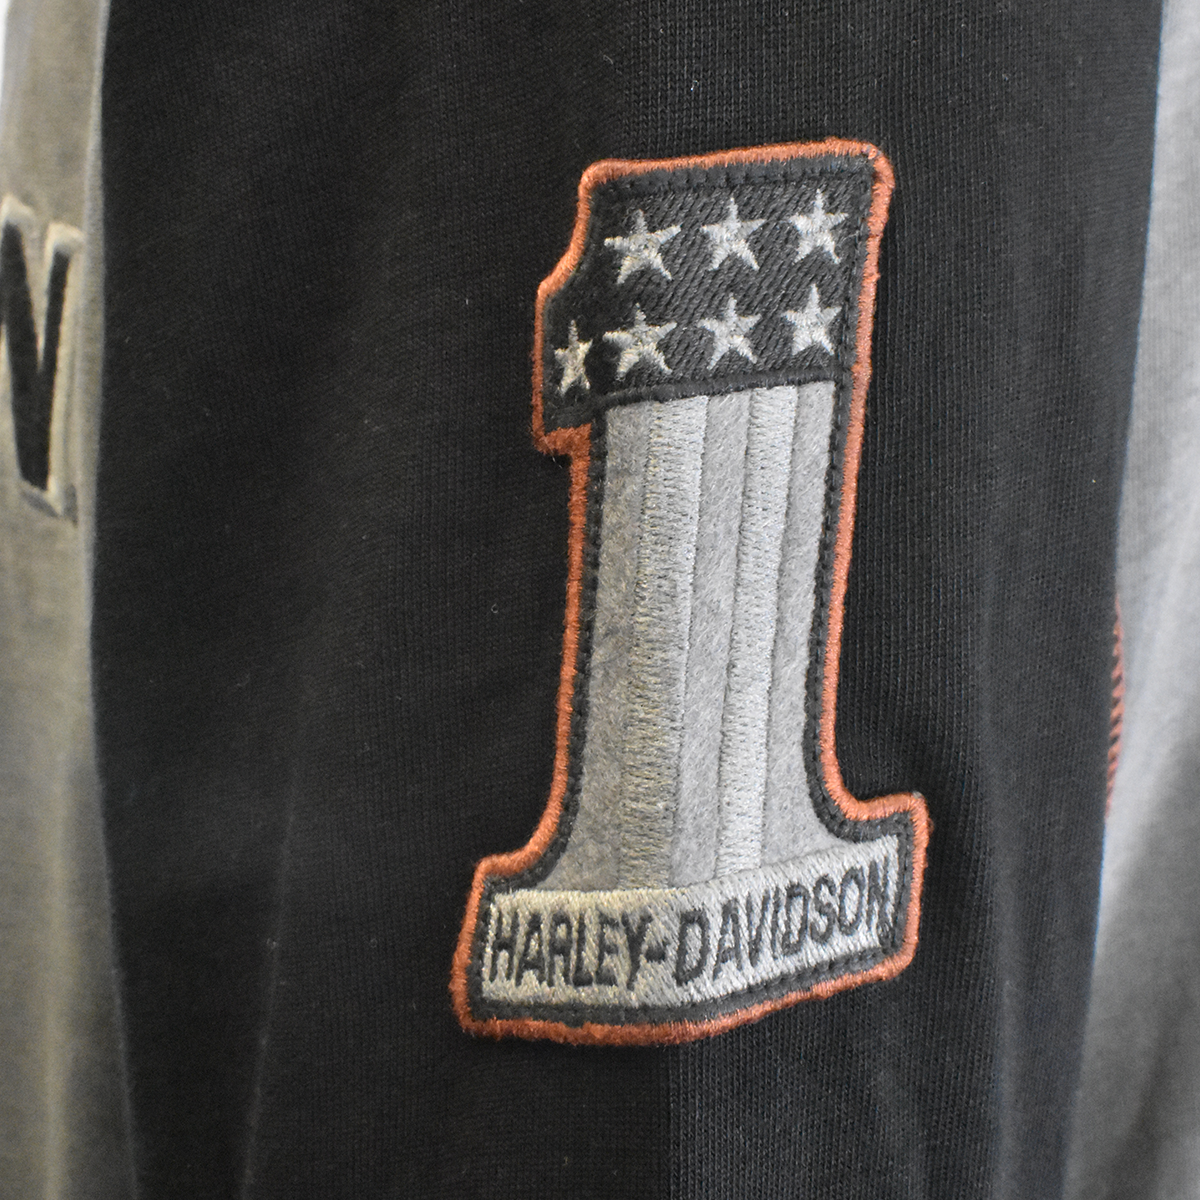 Harley-Davidson Men's Hooded T-Shirt Grey Wing Long Sleeve Raglan (S72)